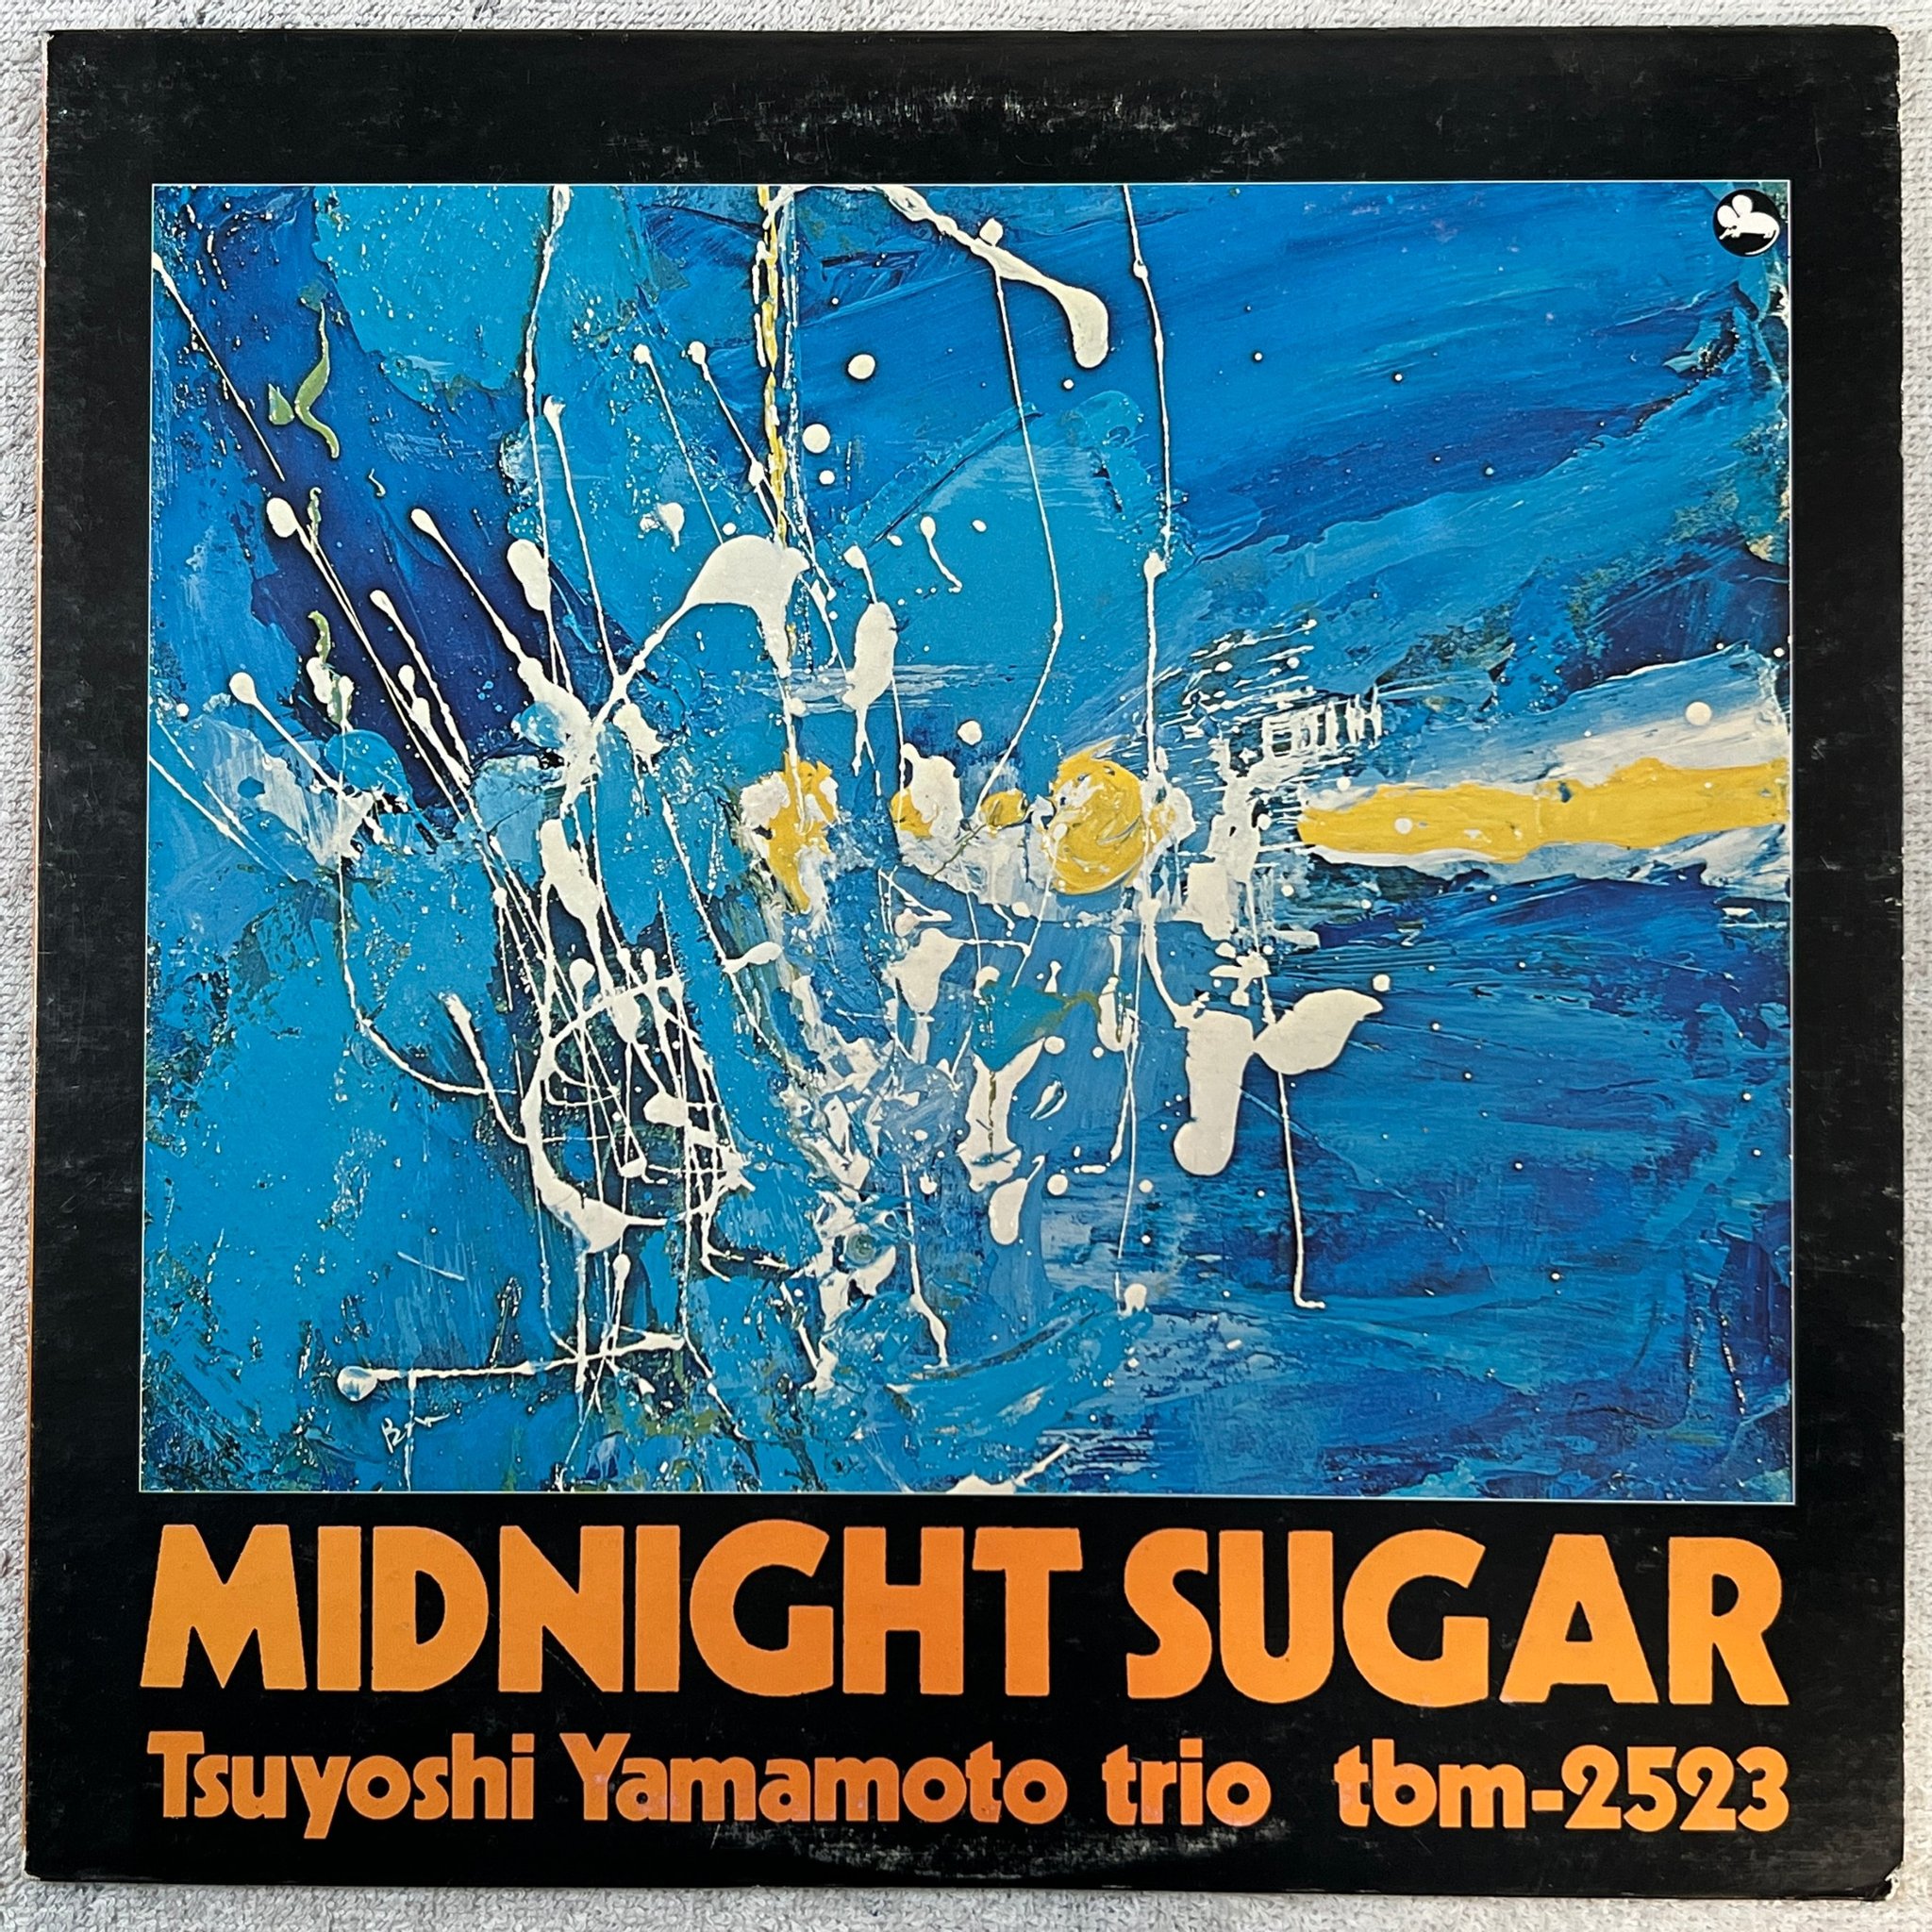 Omslagsbild för skivan TSUYOSHI YAMAMOTO TRIO midnight sugar LP -74 Japan THREE BLIND MICE TBM-23